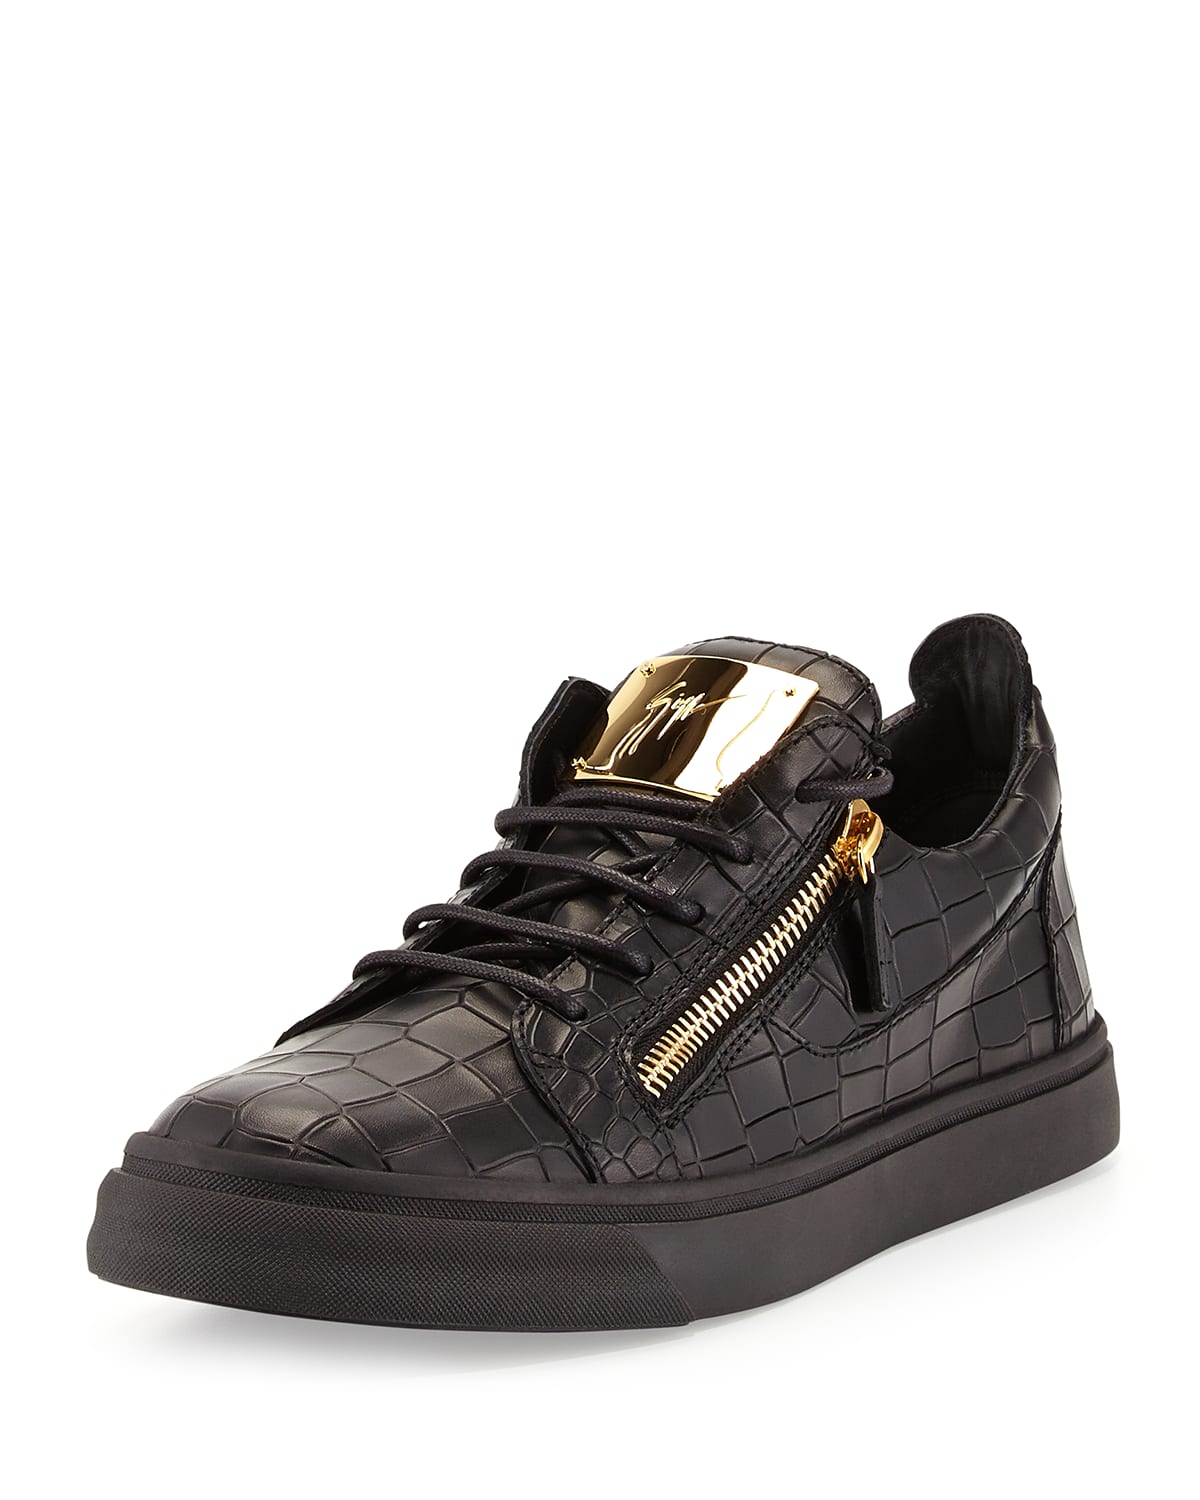 Giuseppe Zanotti Croc-Embossed Low-Top Sneakers, Black - Bergdorf Goodman